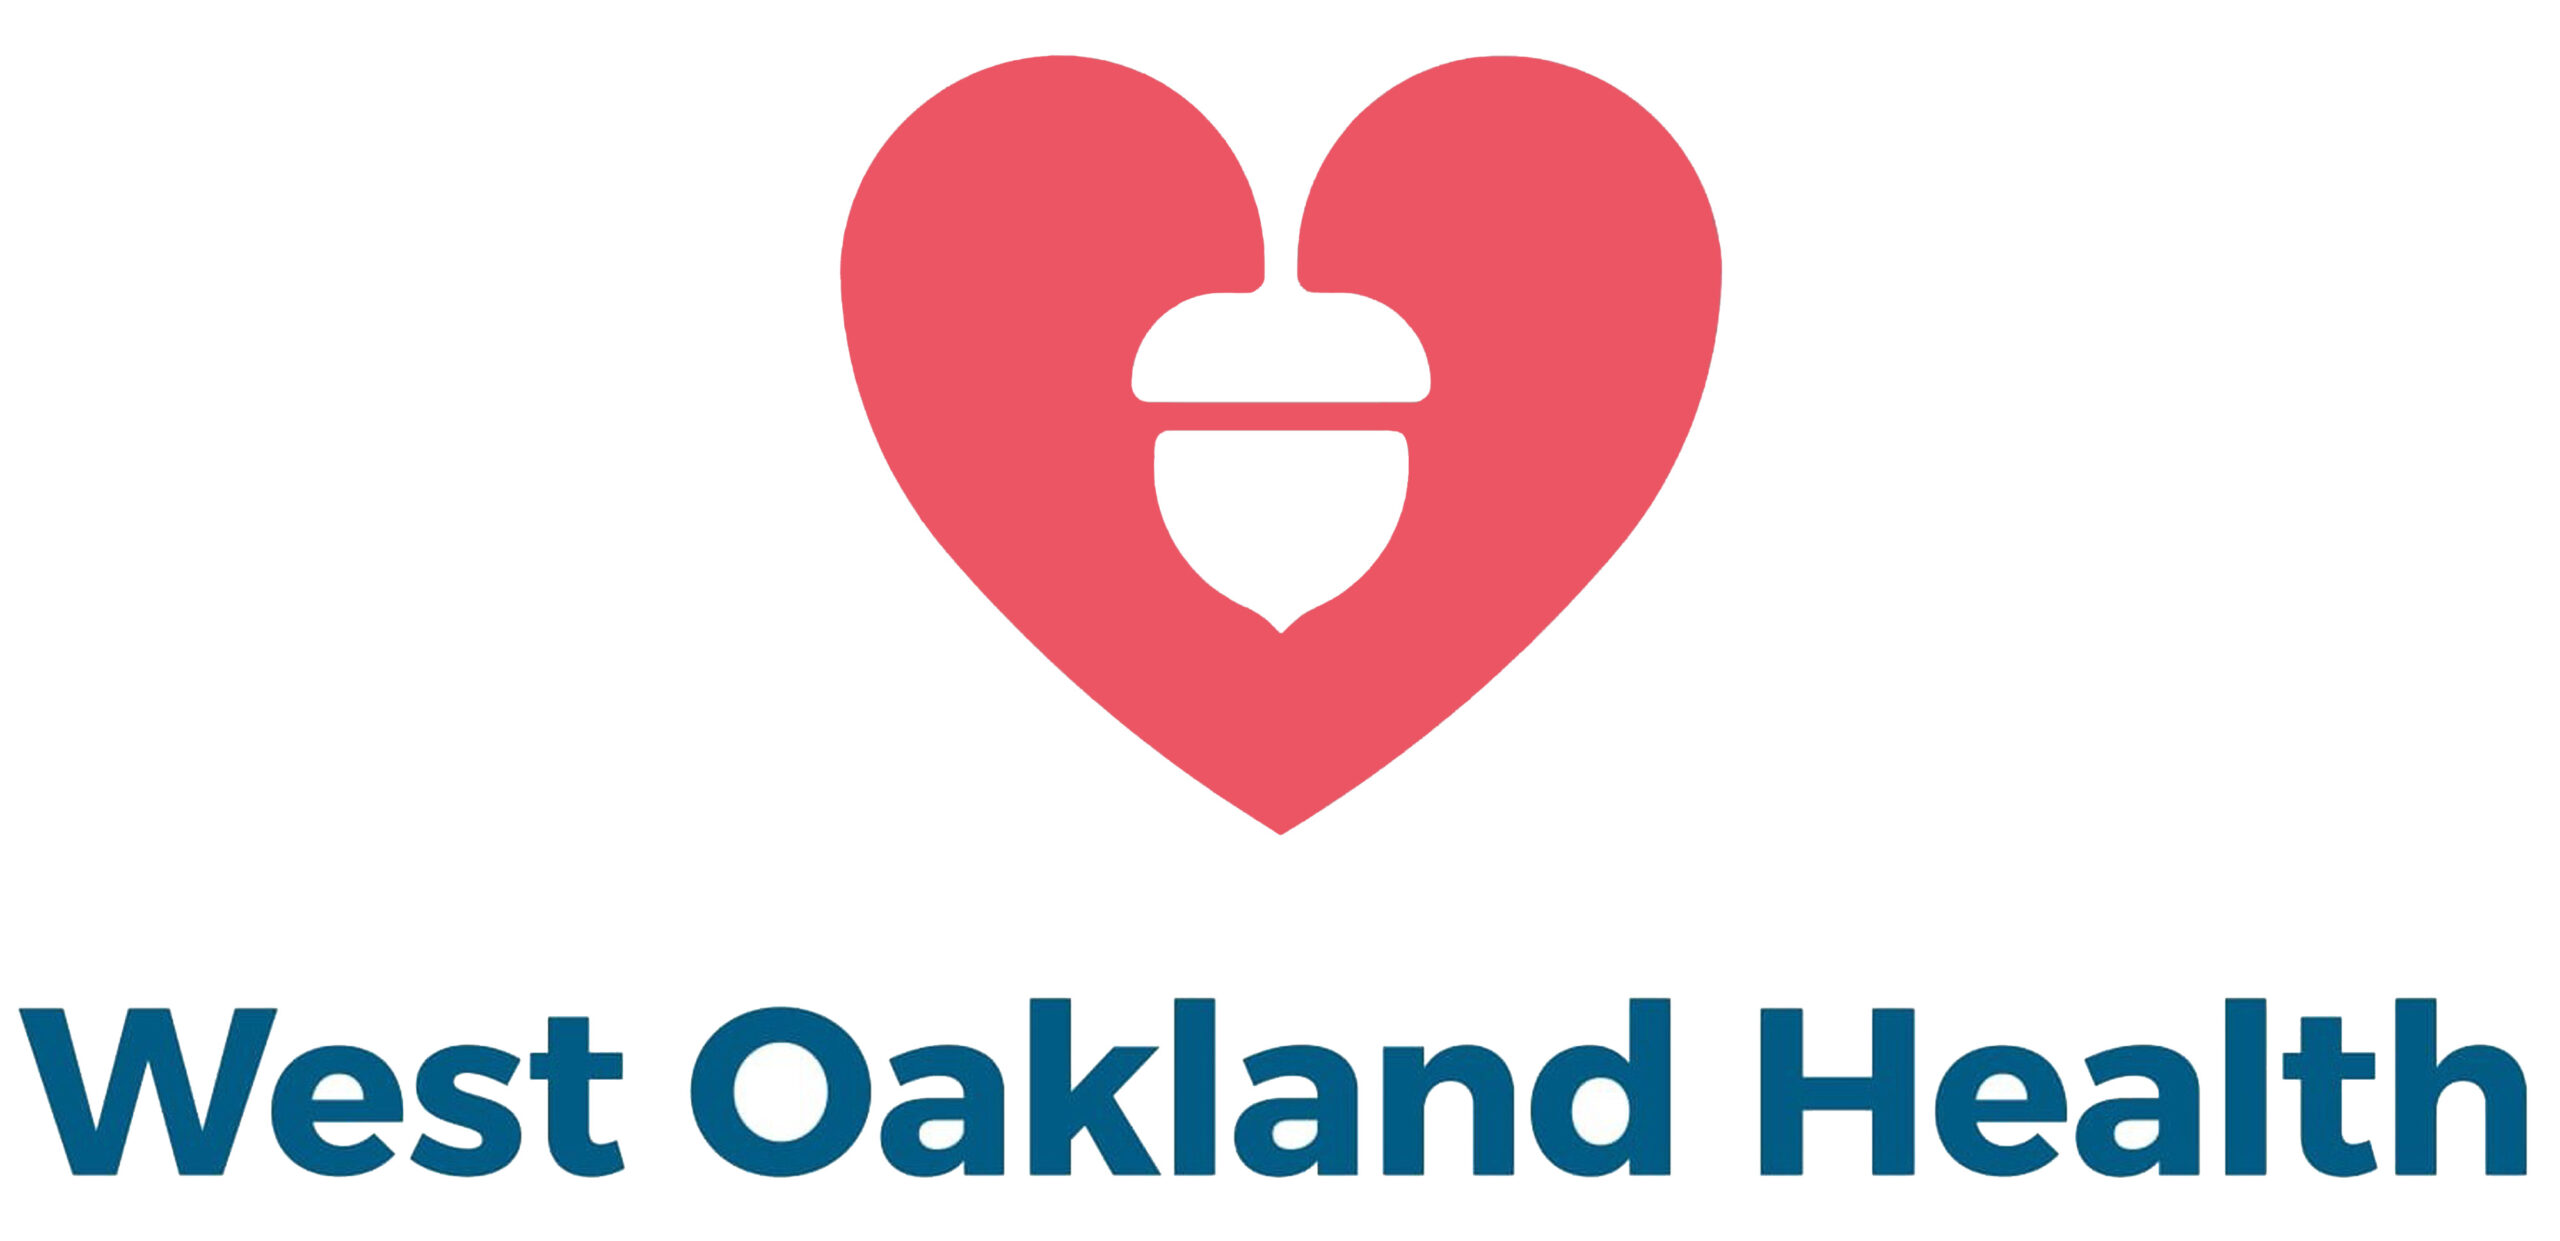 West Oakland Health logo